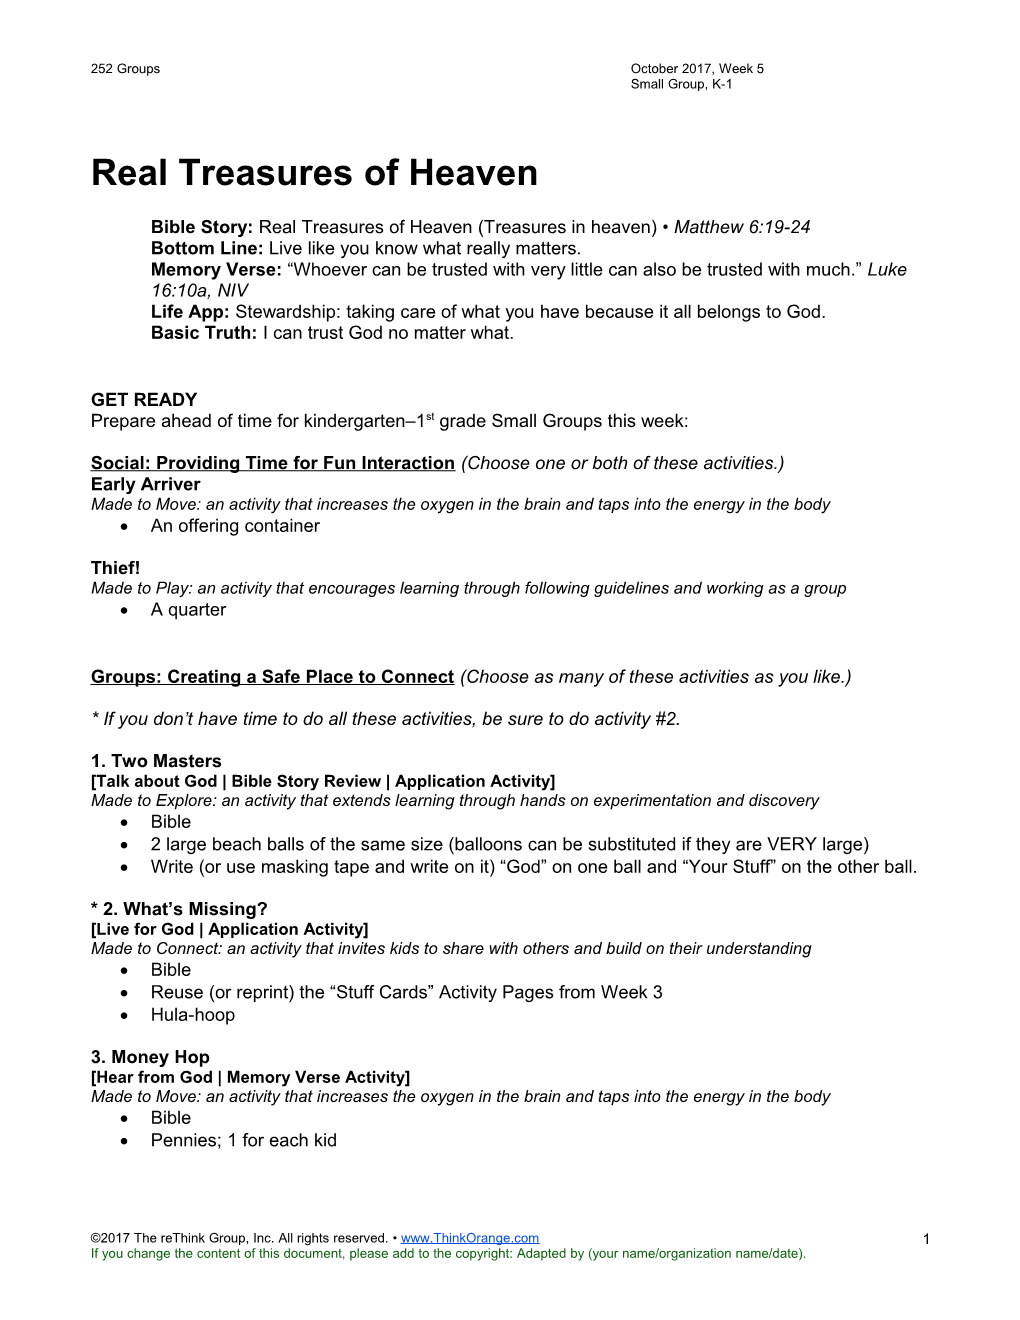 Real Treasures of Heaven